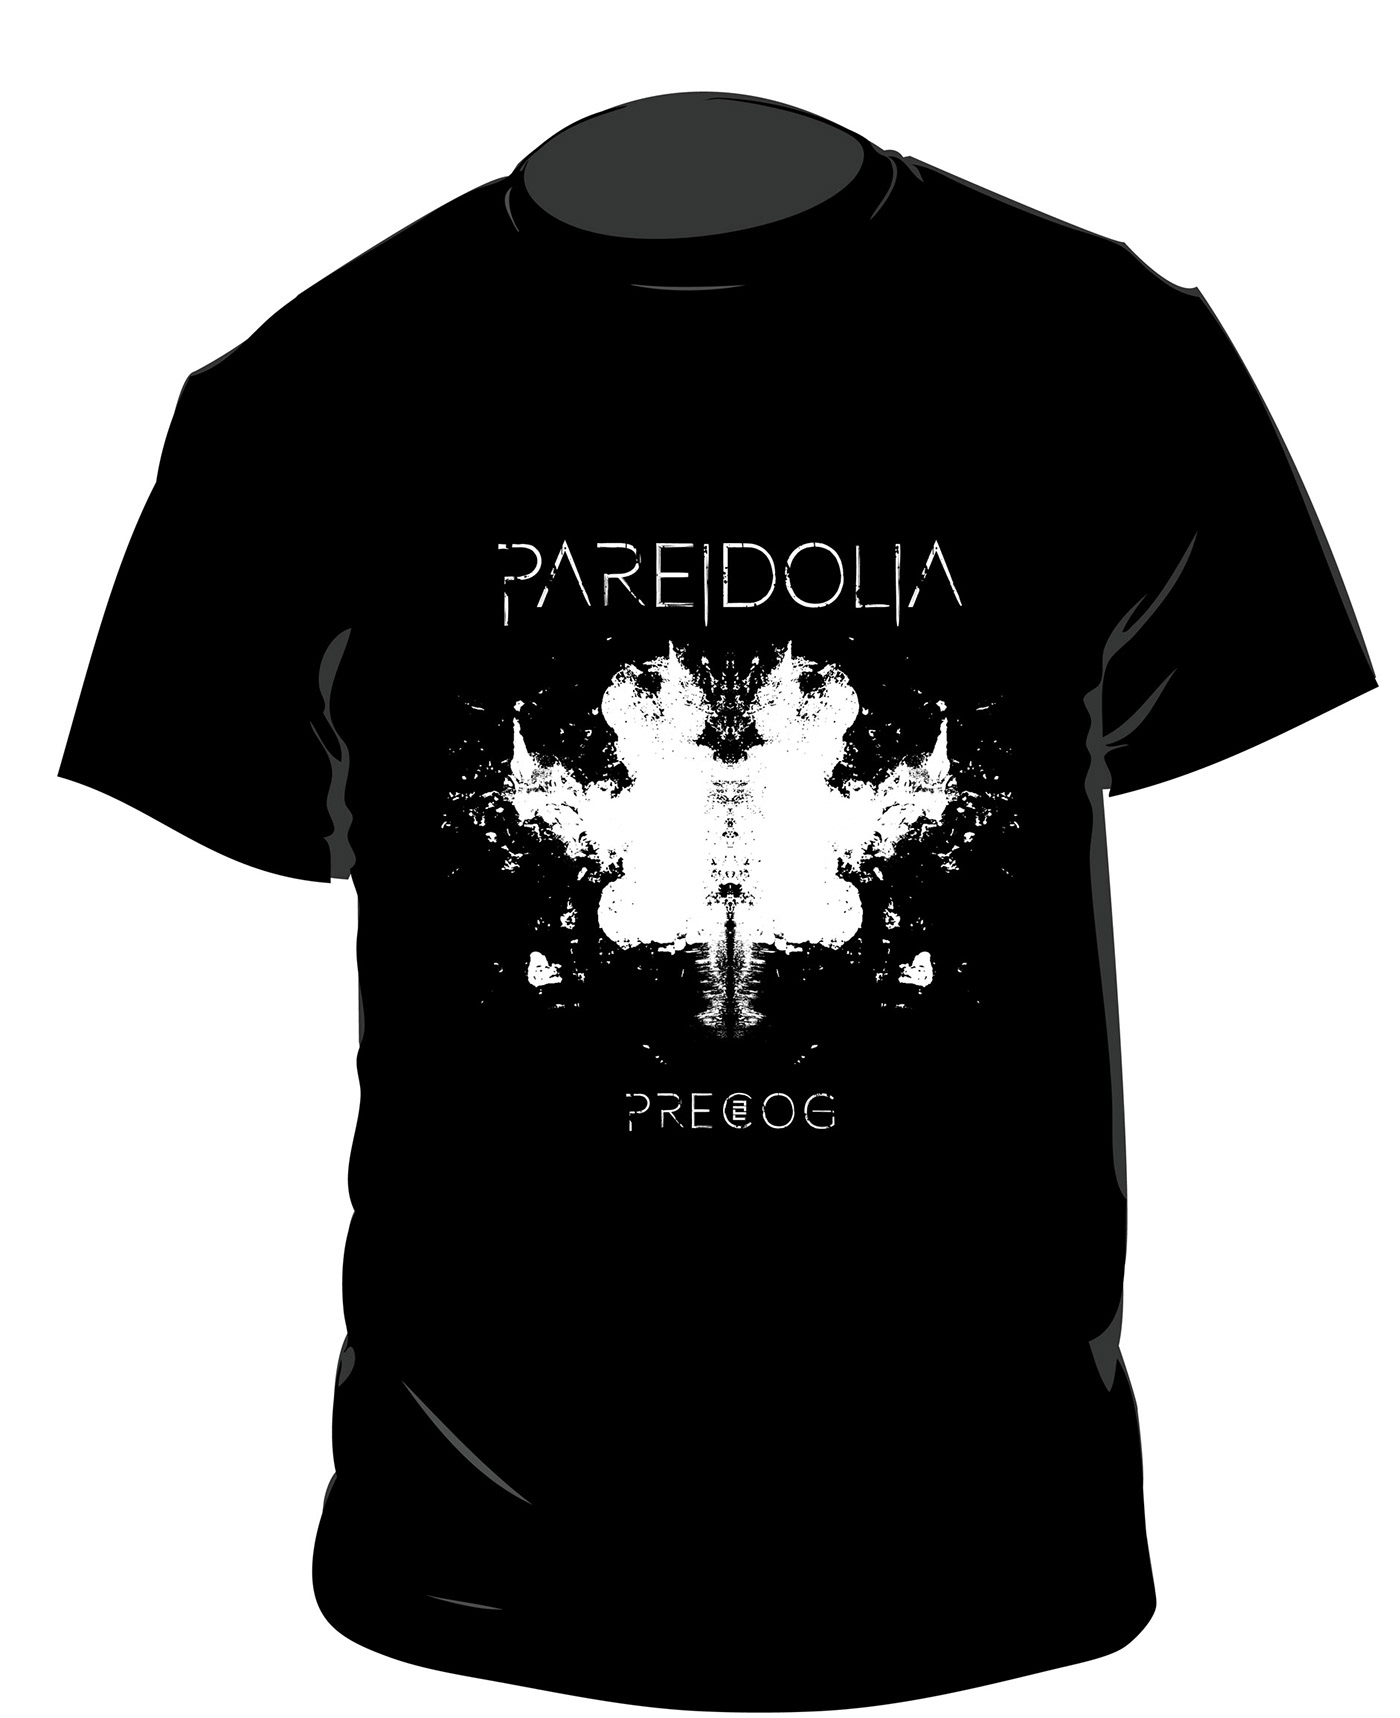 precog electronica pareidolia shirt band music industrial ink blot